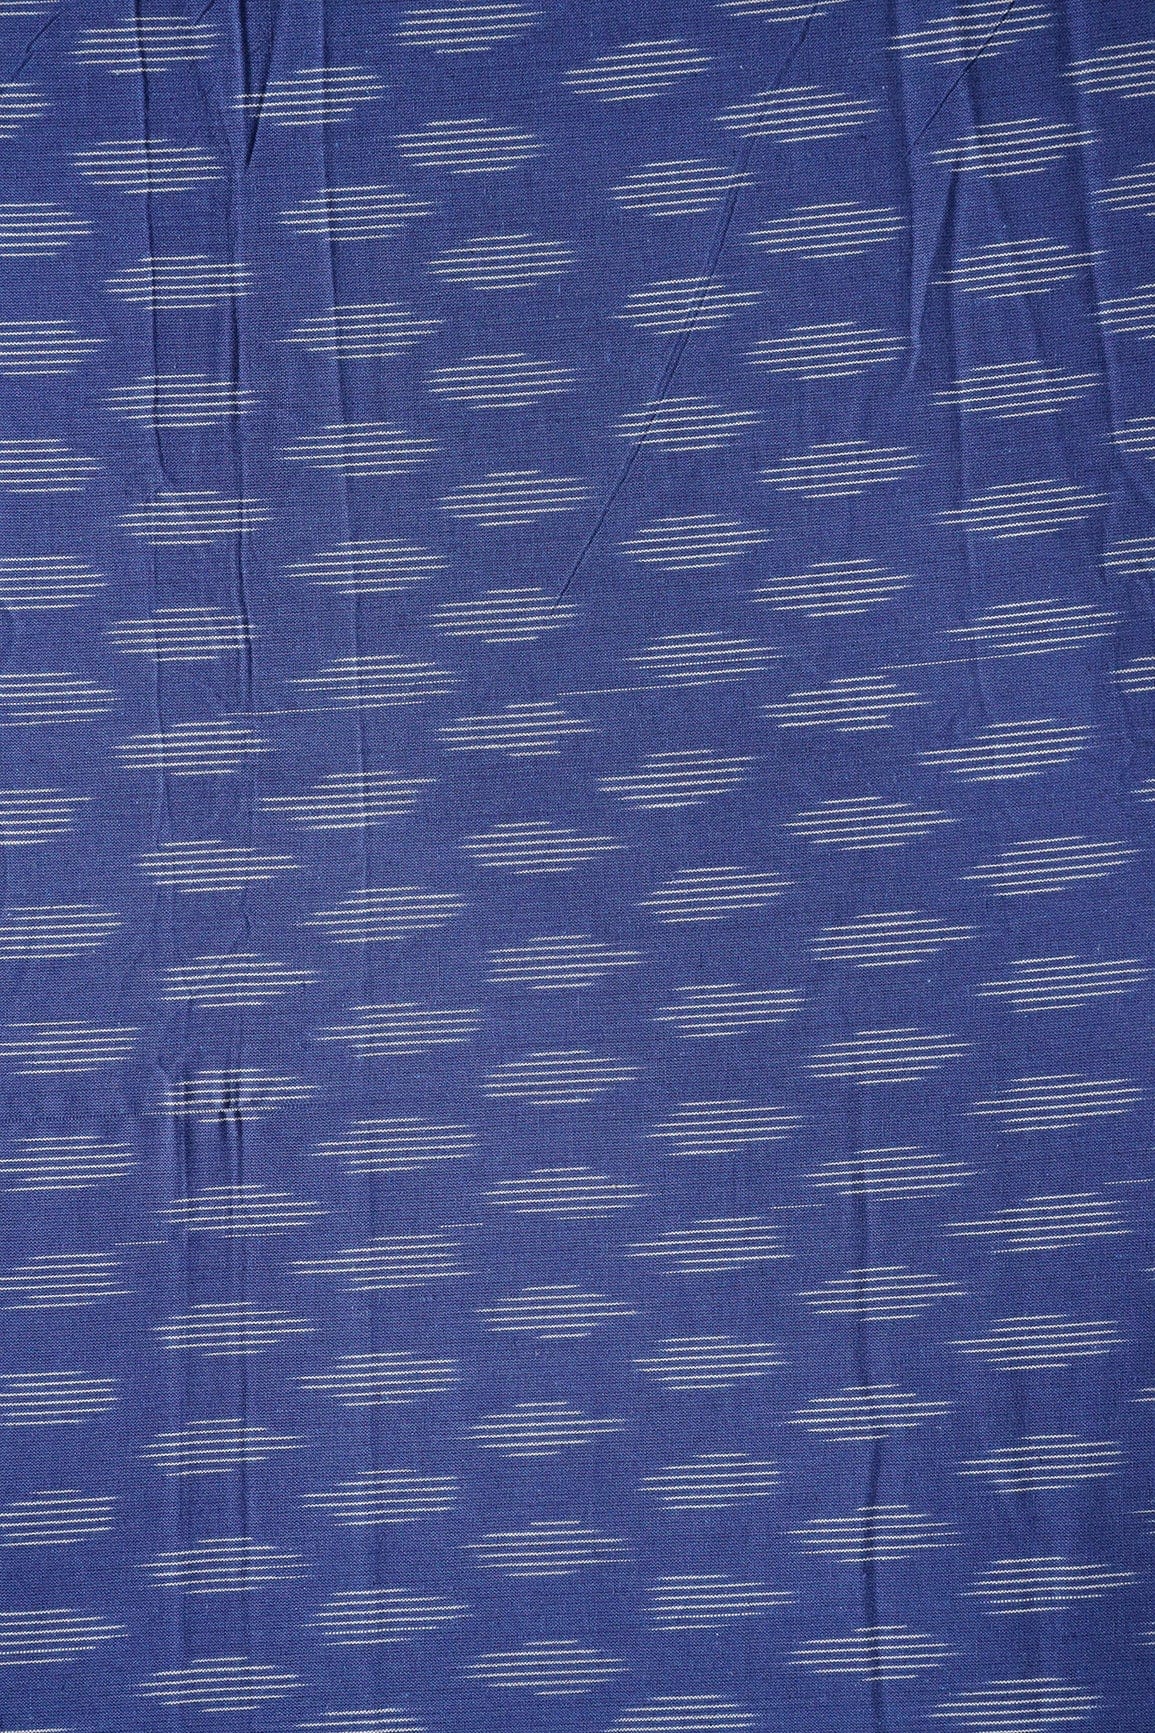 doeraa Hand Woven Blue And White Geometric Pattern Handwoven Ikat Organic Cotton Fabric